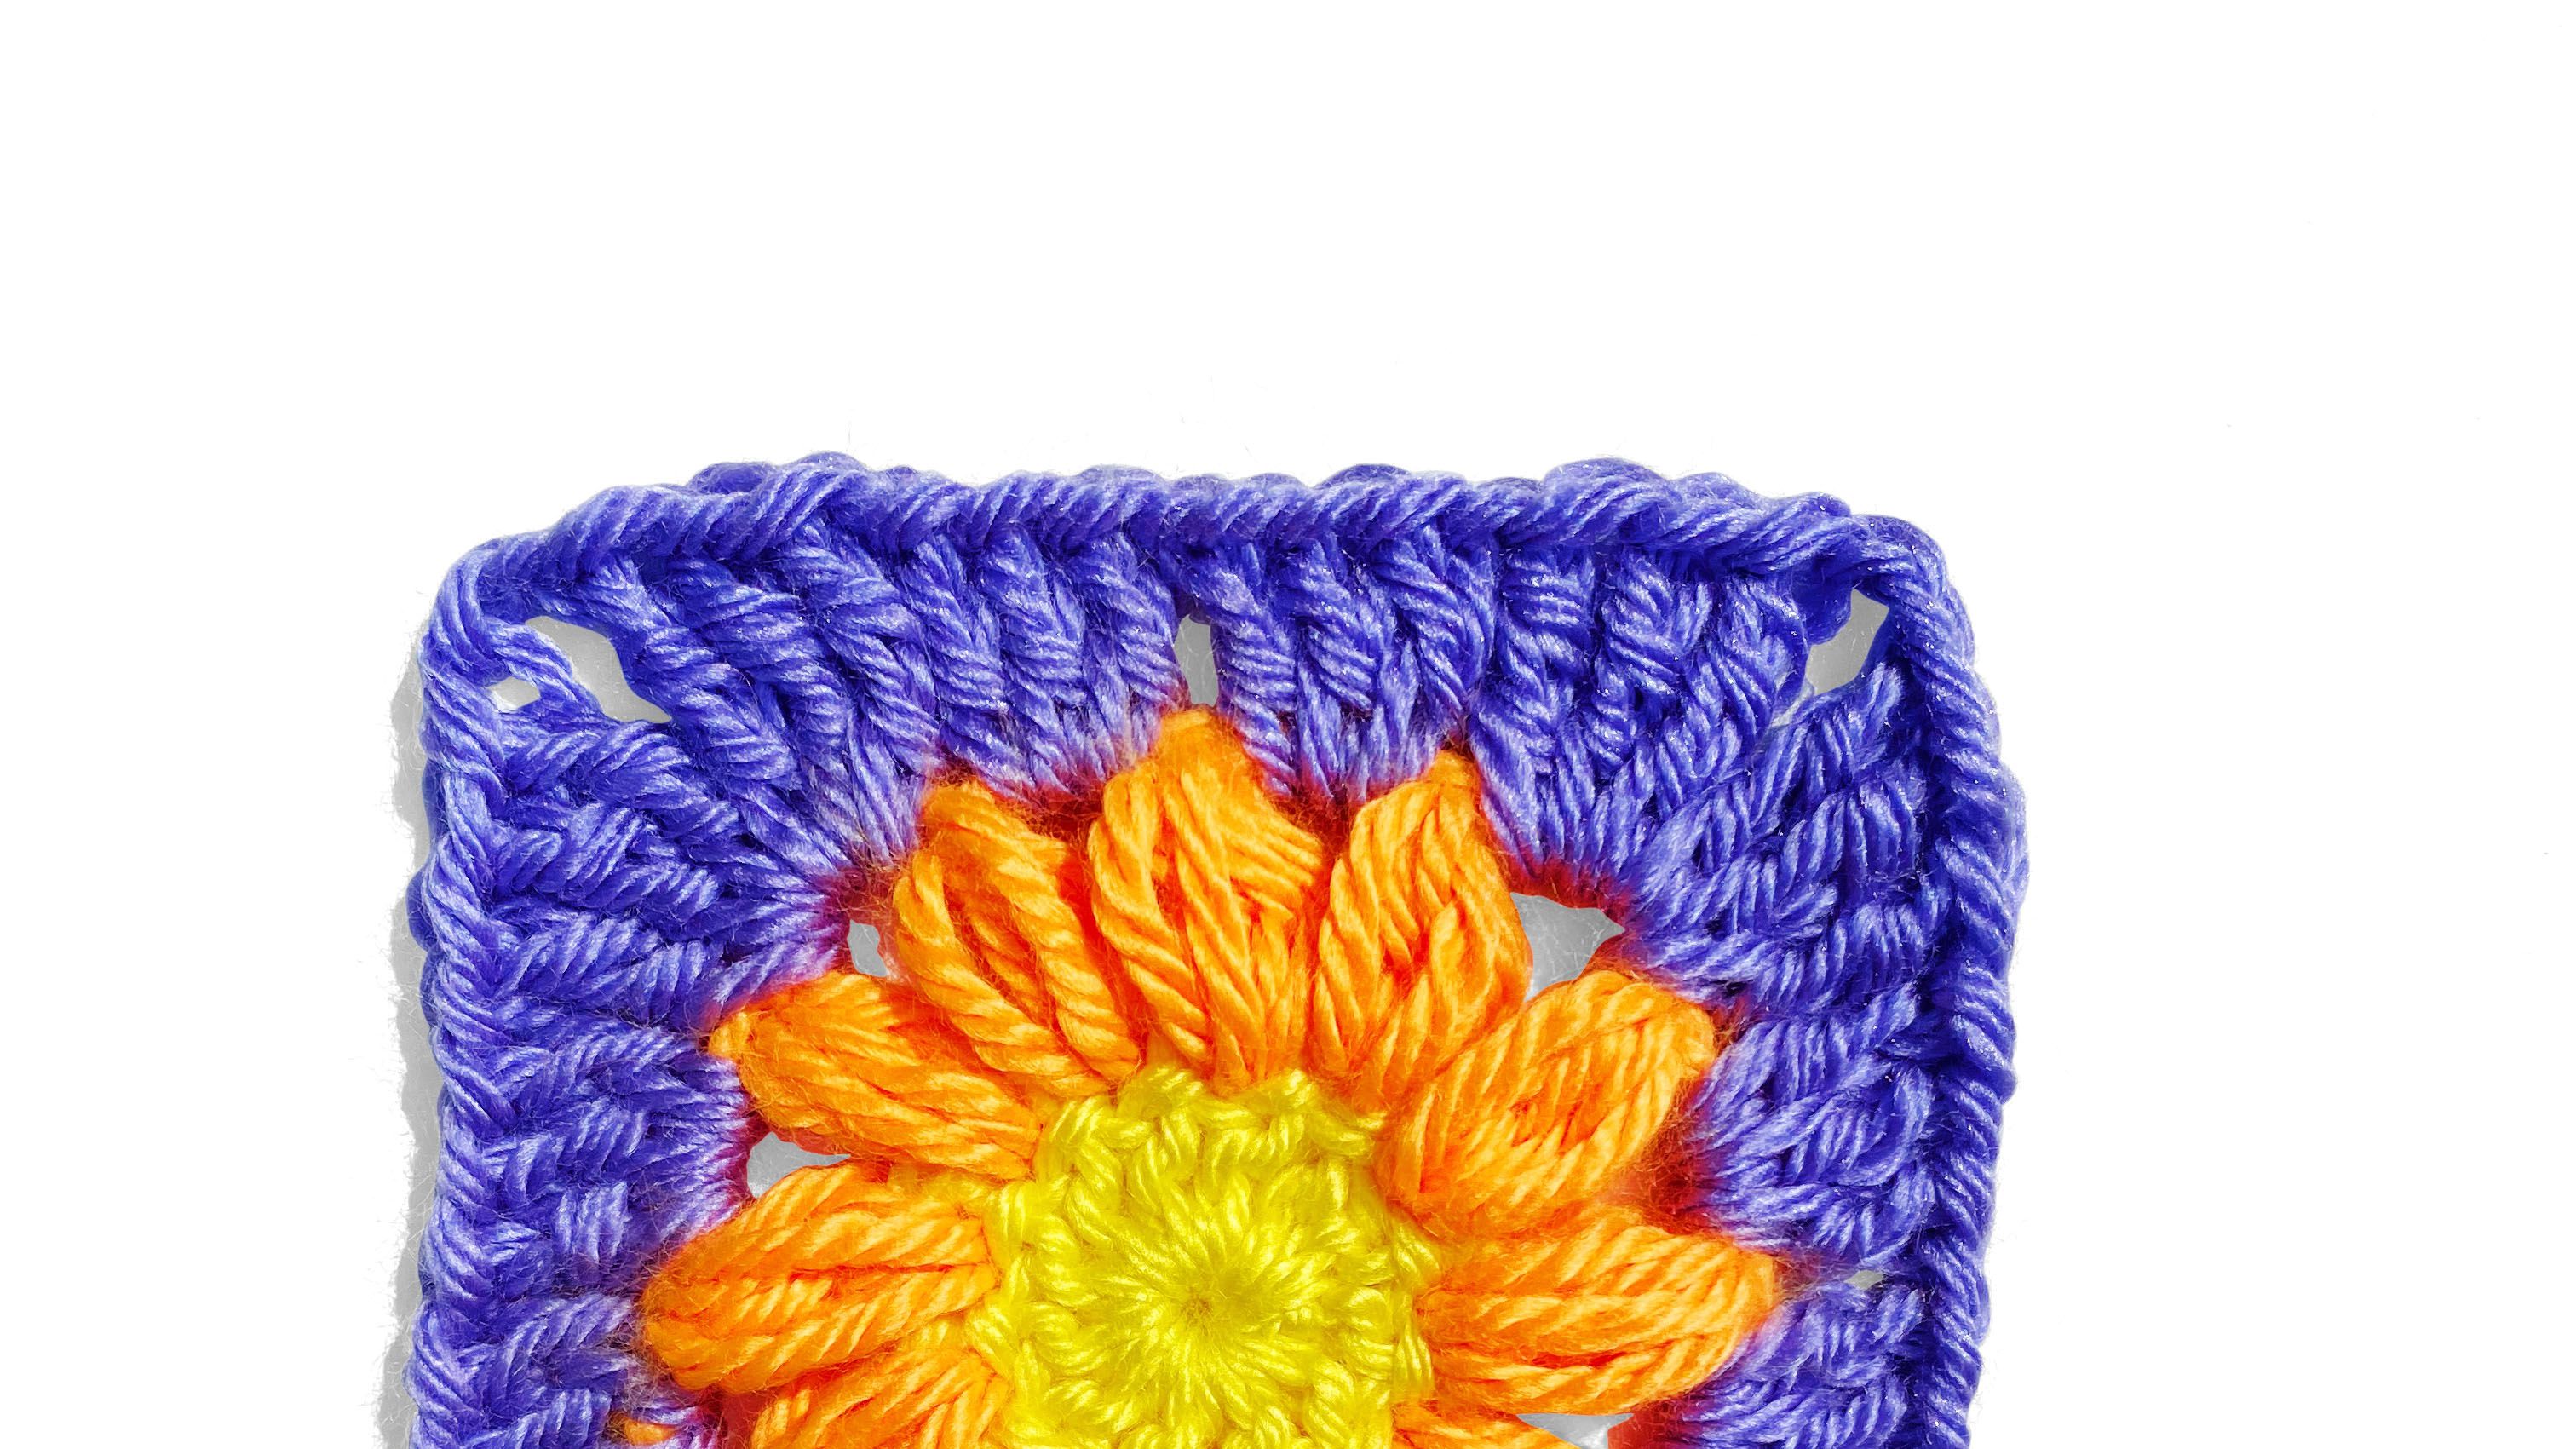 Granny Purse Crochet Pattern - Daisy Cottage Designs